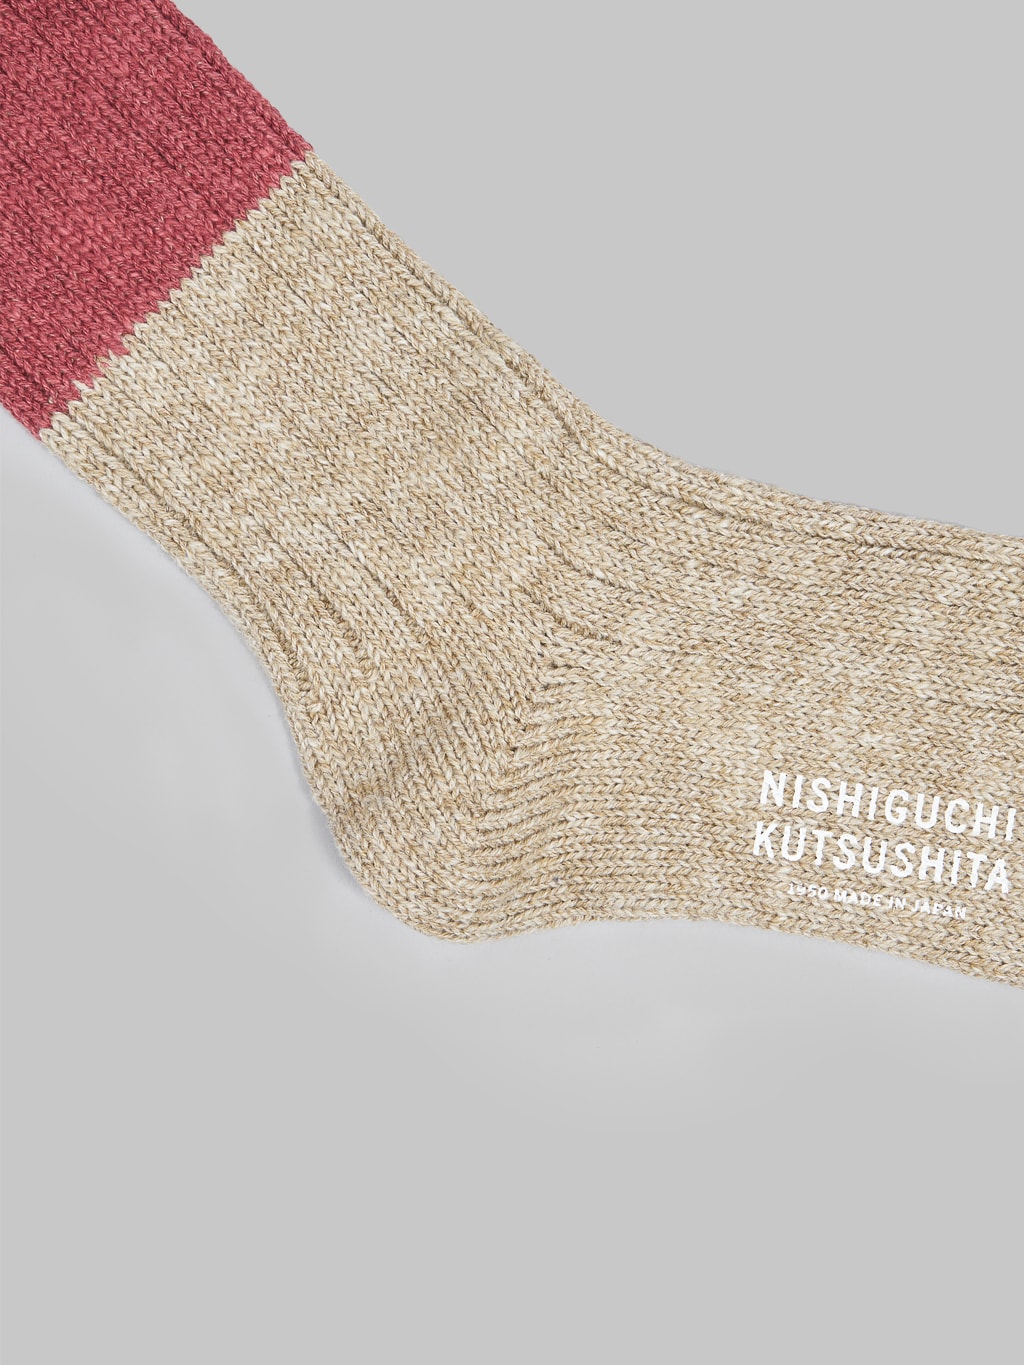 Nishiguchi Kutsushita Wool Cotton Slab Socks Red Texture